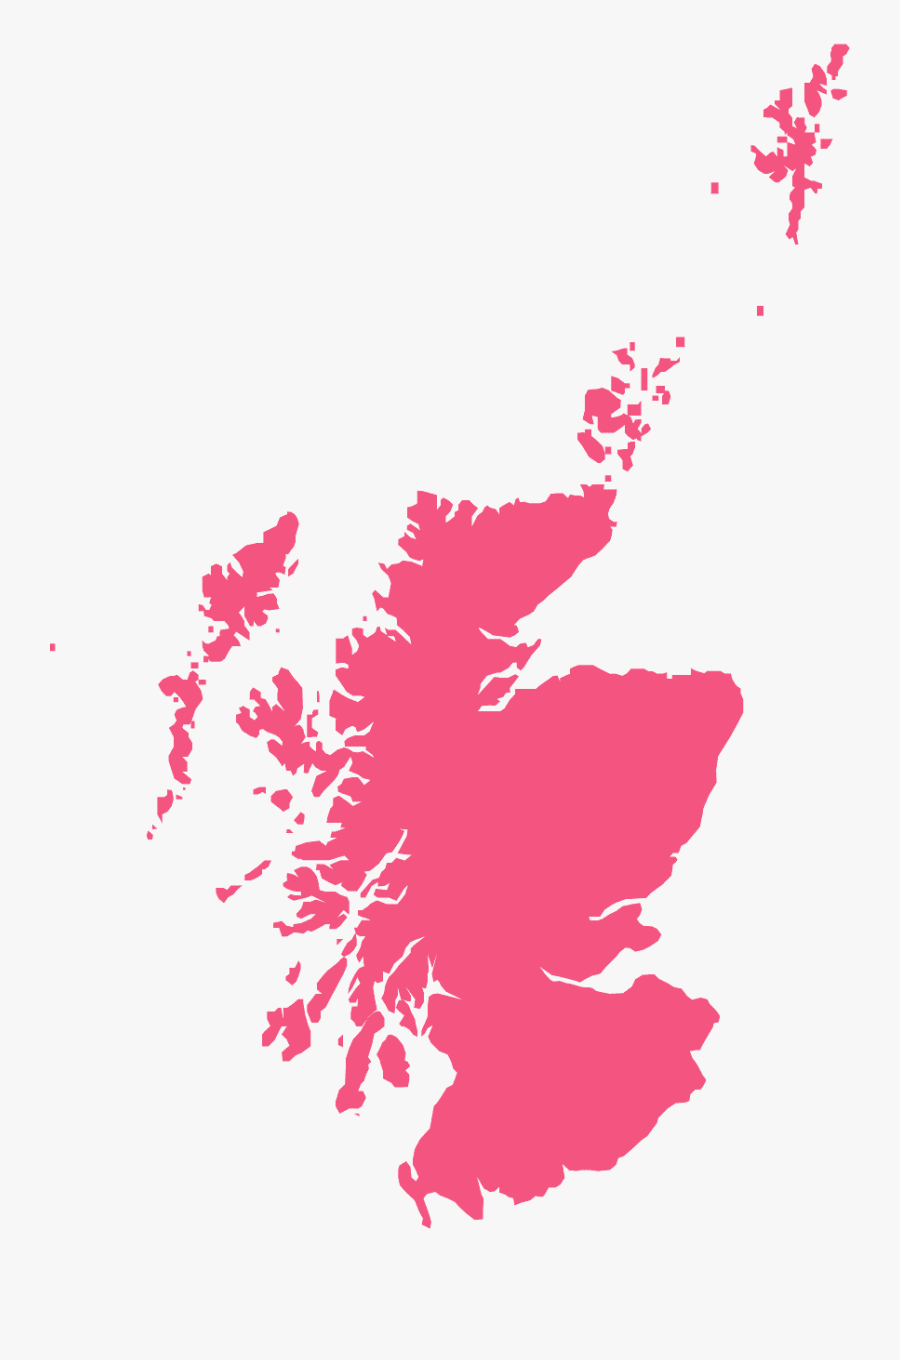 Scotland Map Vector Free, Transparent Clipart